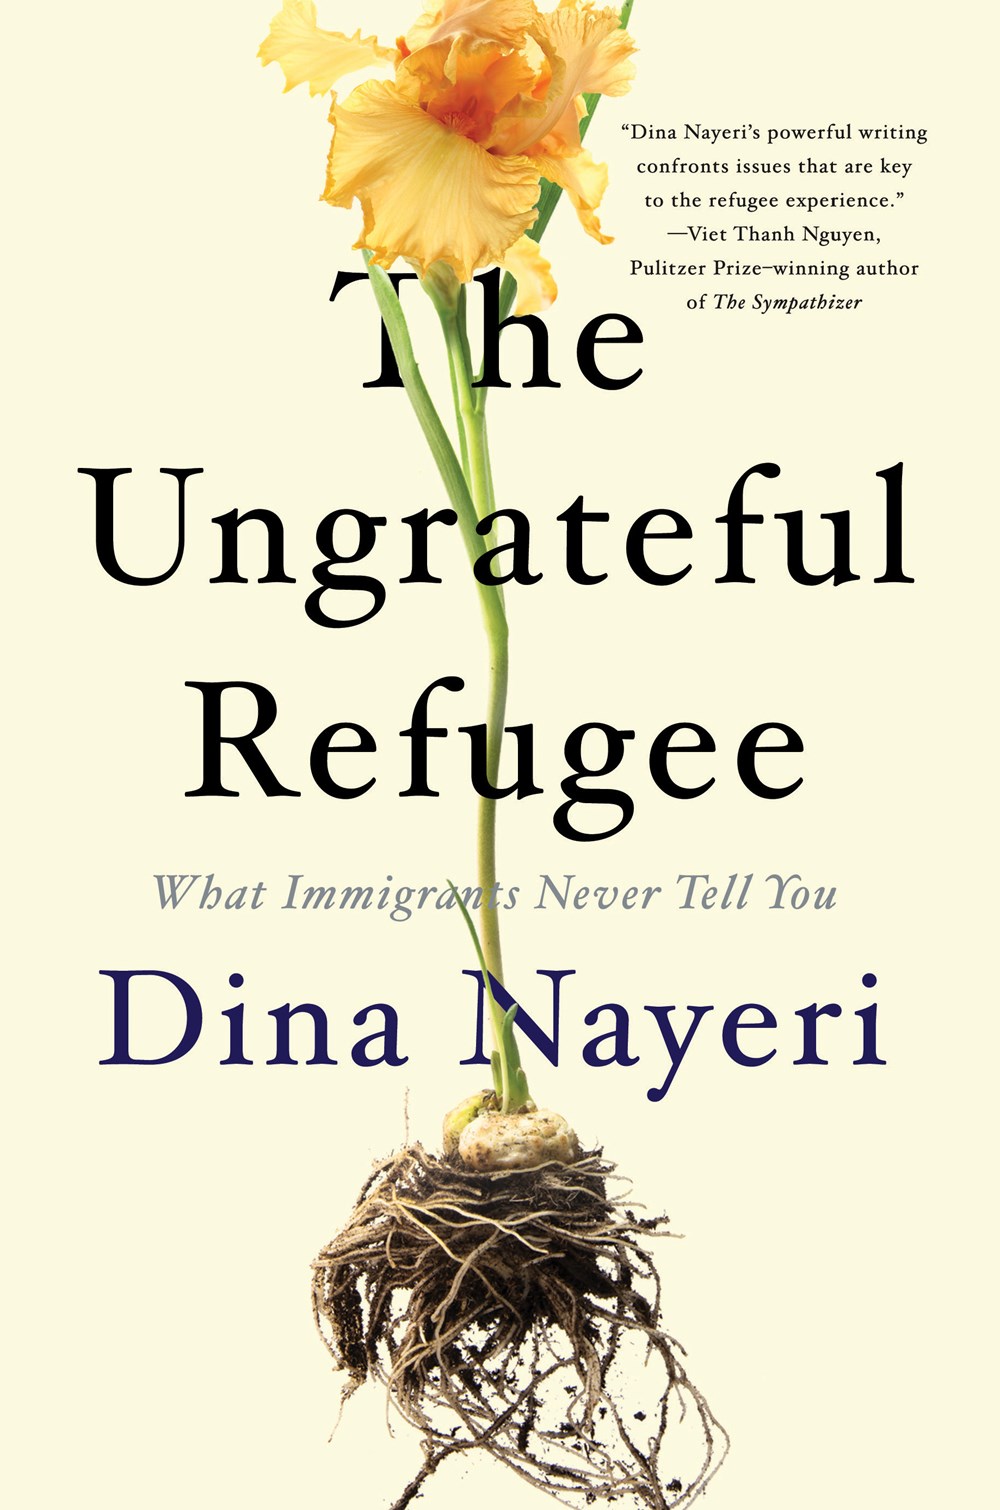 Image for "The Ungrateful Refugee"